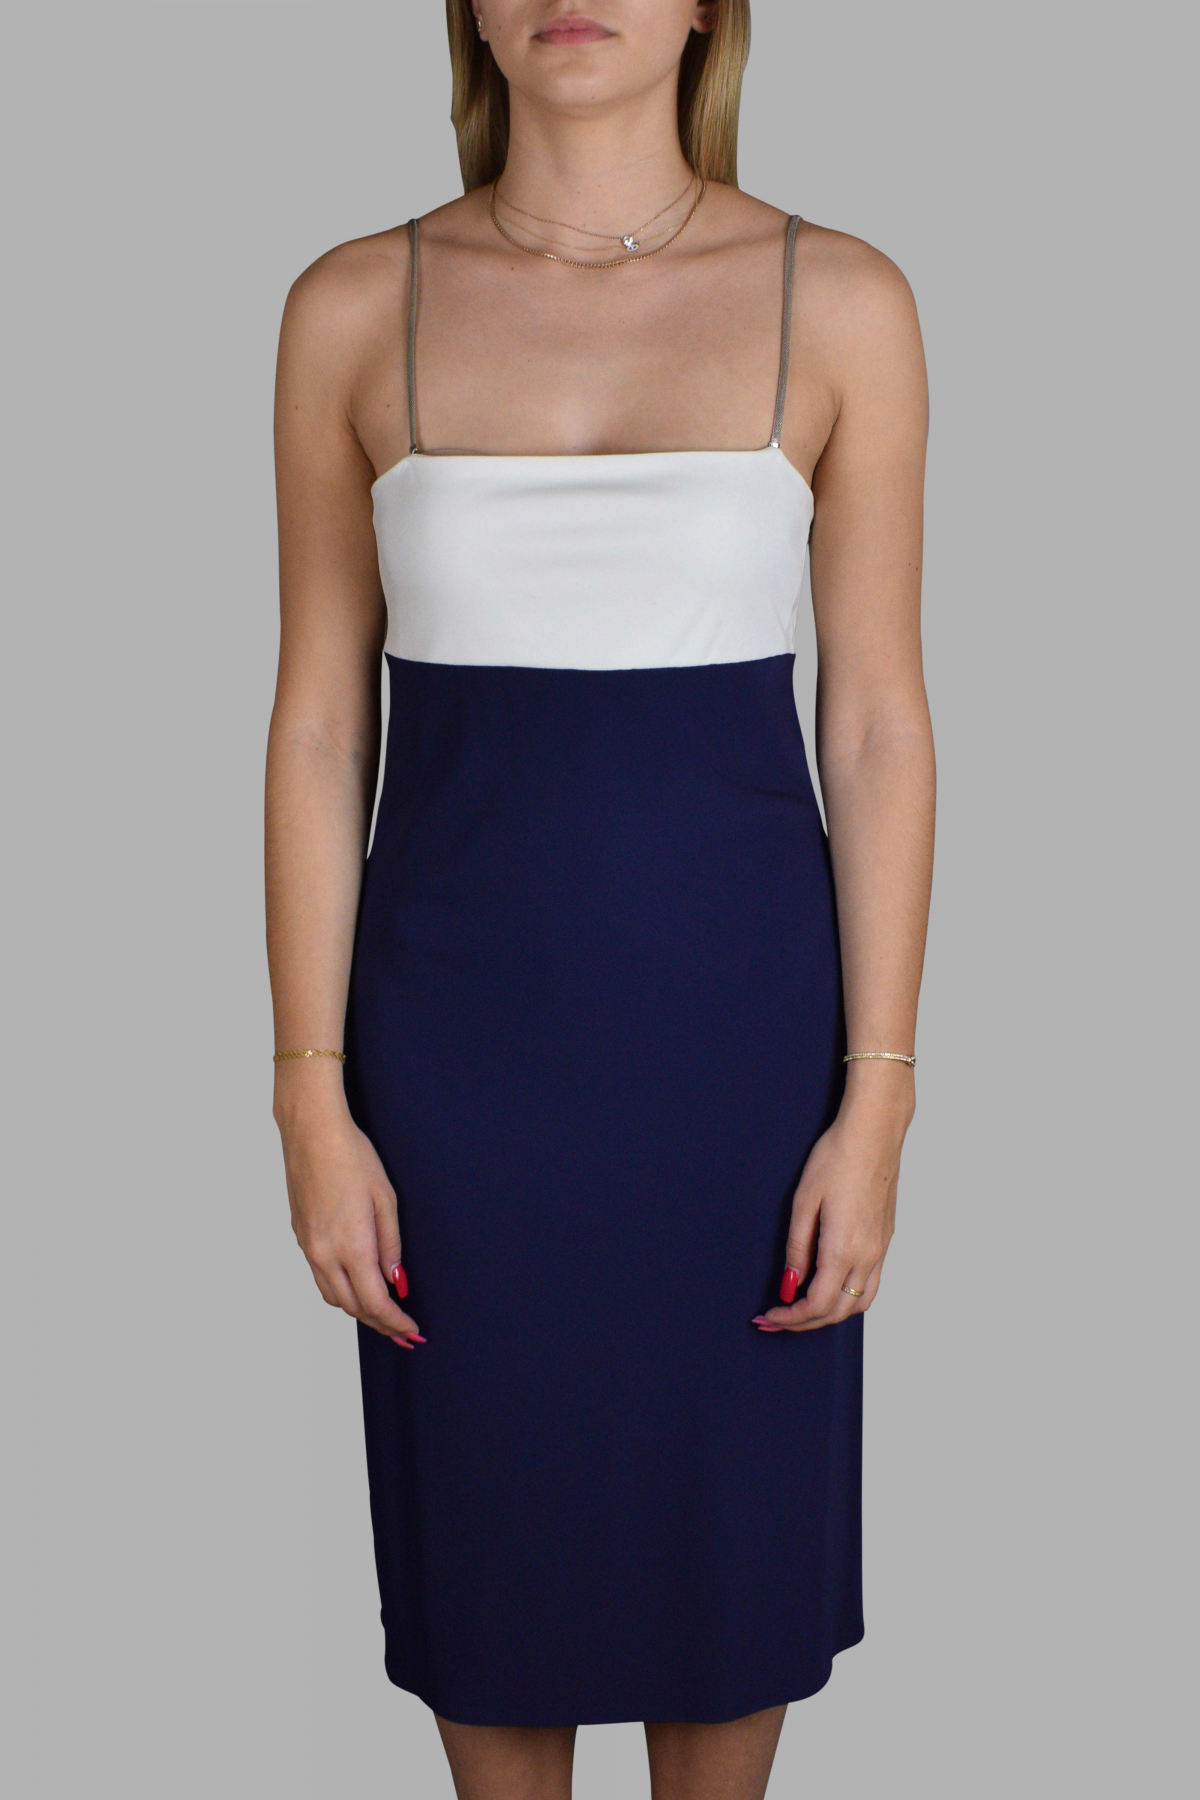 Luxury dress for women - Ralph Lauren blue and white dress